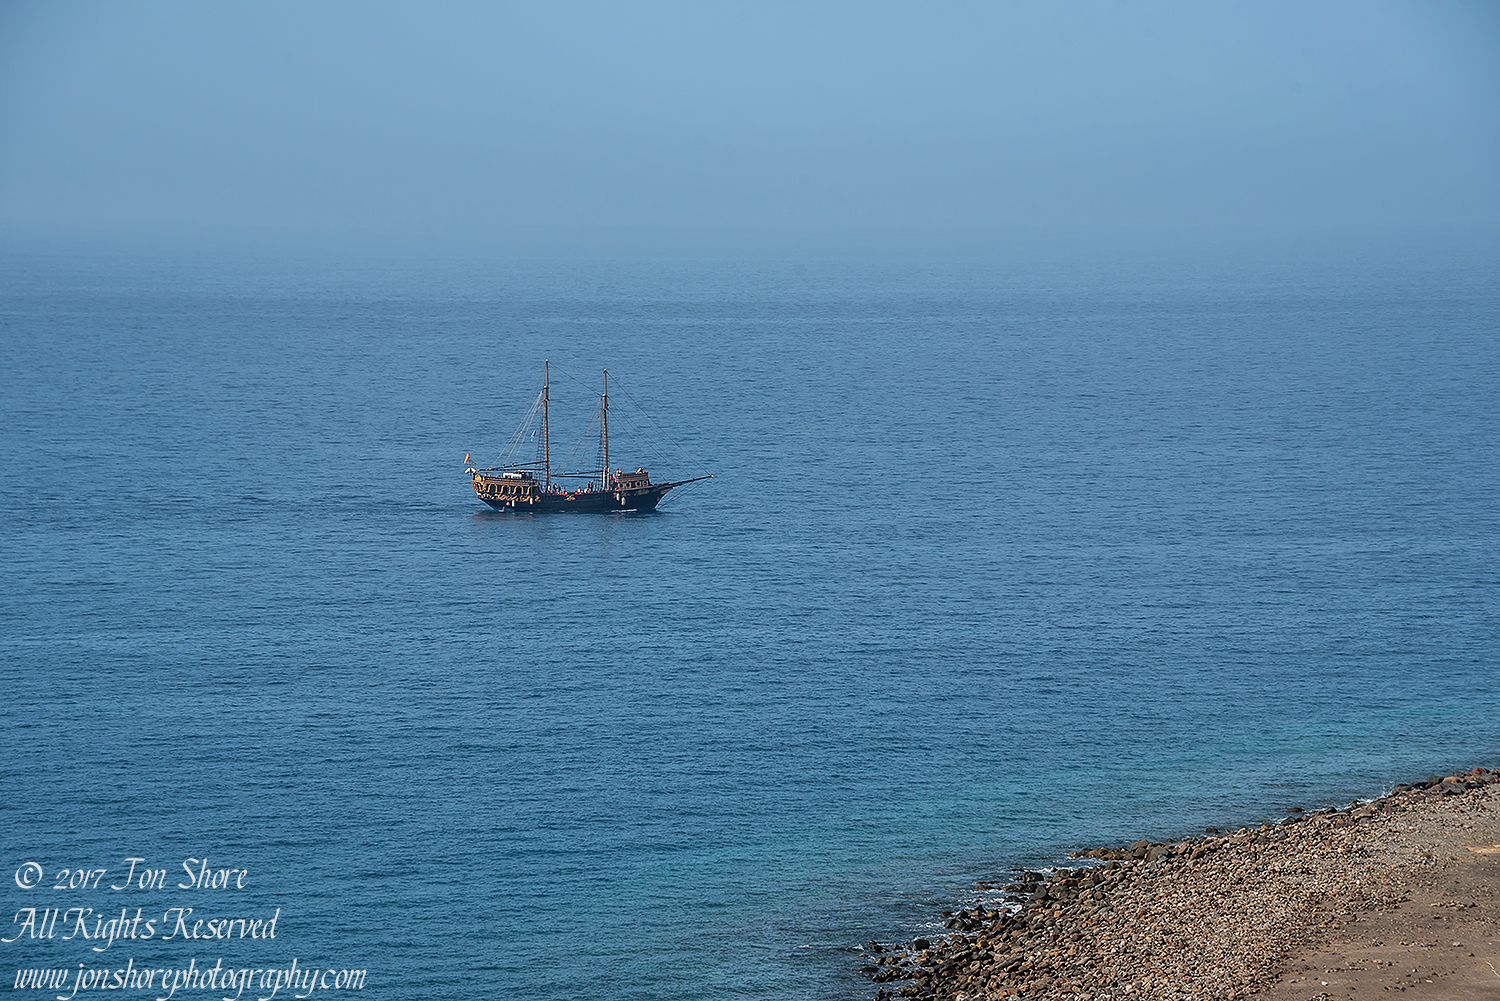 Pirate Ship, Playa de Cura, Gran Canaria. Nikkor 300mm